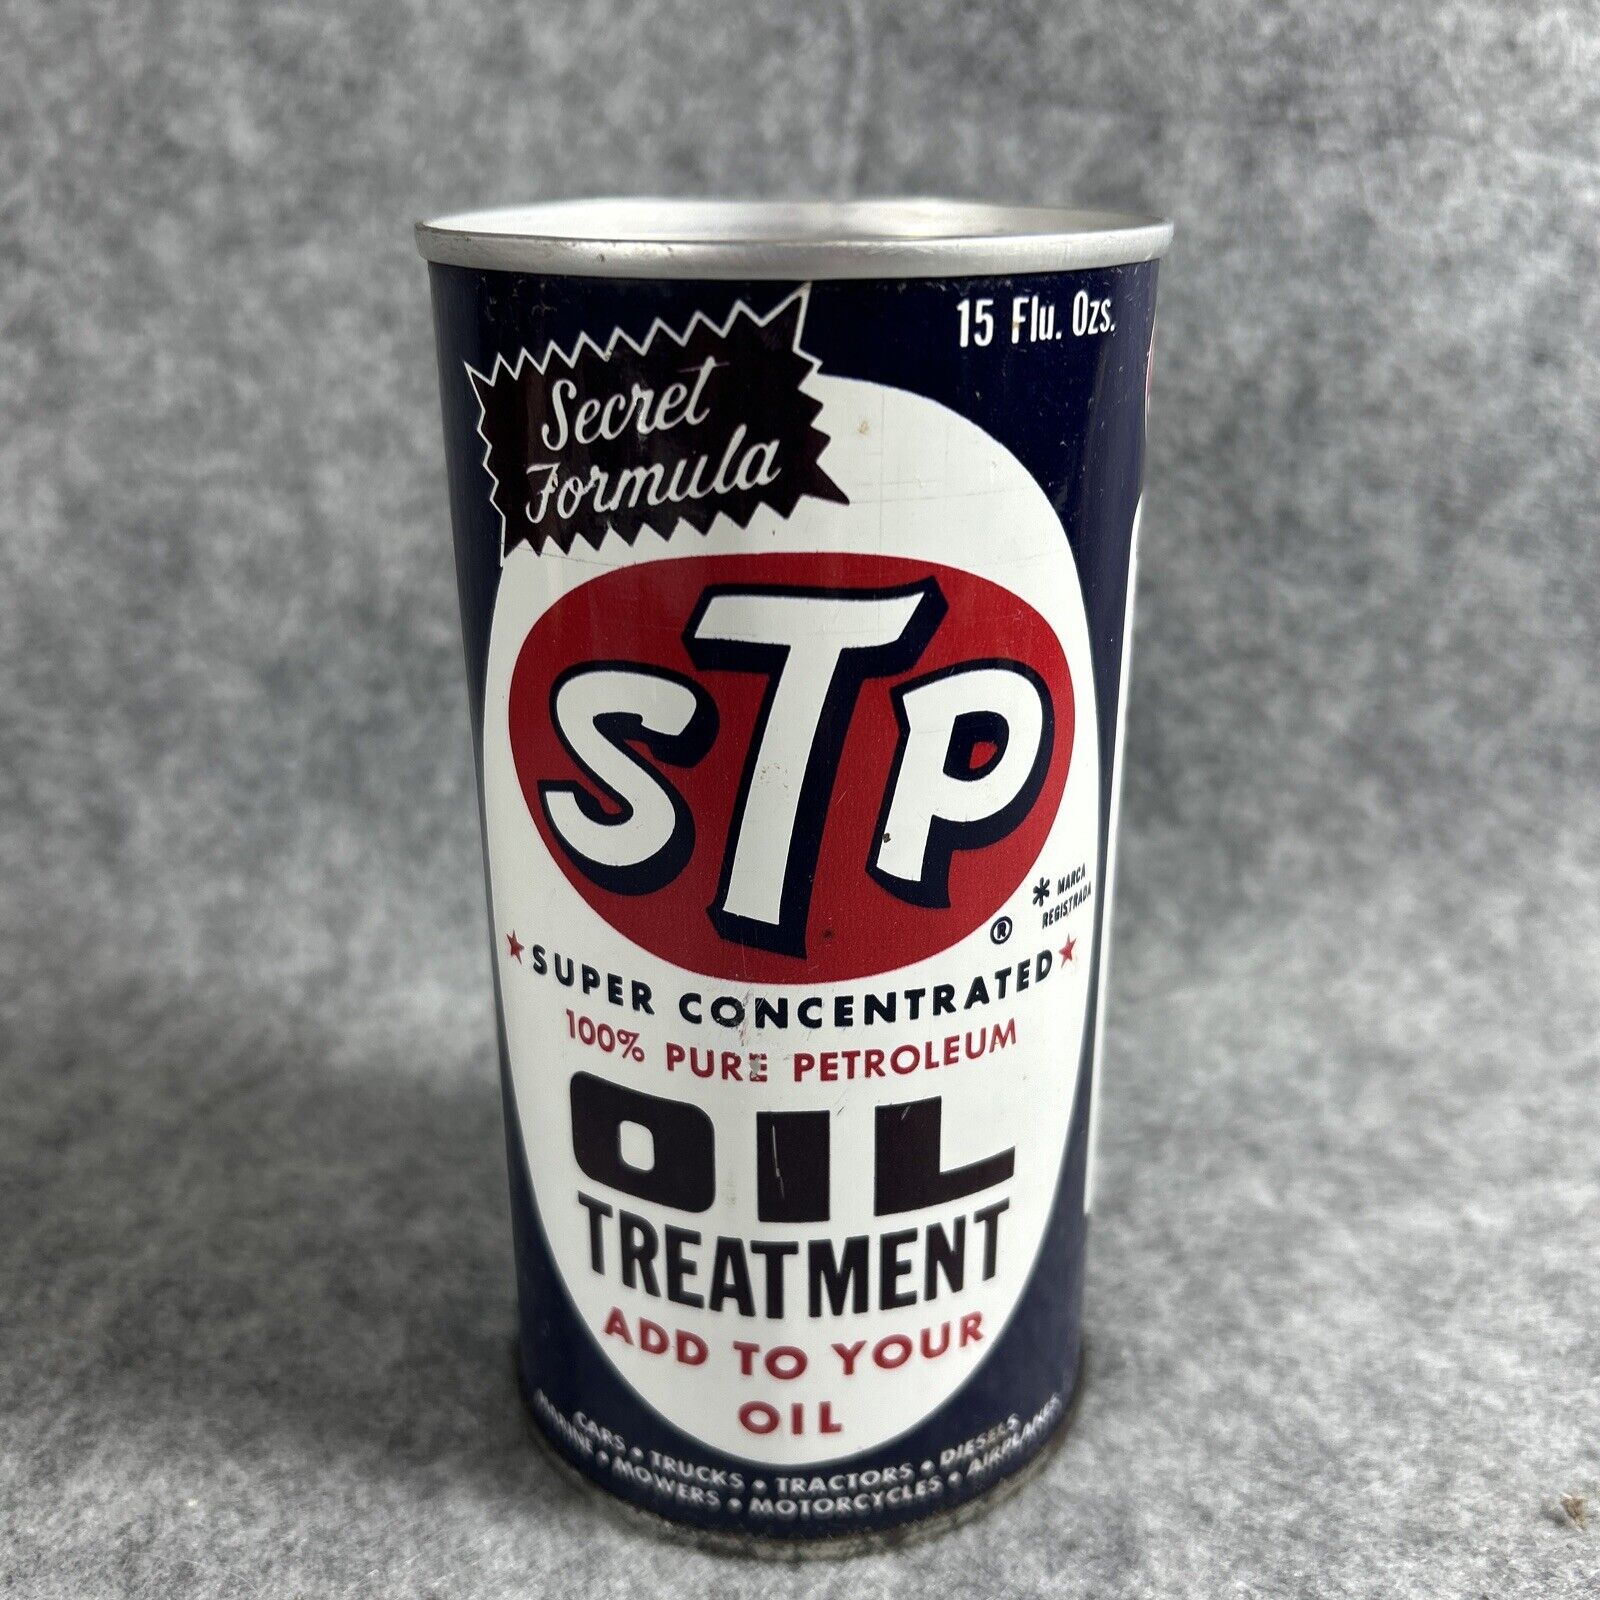 Vintage STP “Secret” Formula, Super Concentrated Oil Treatment